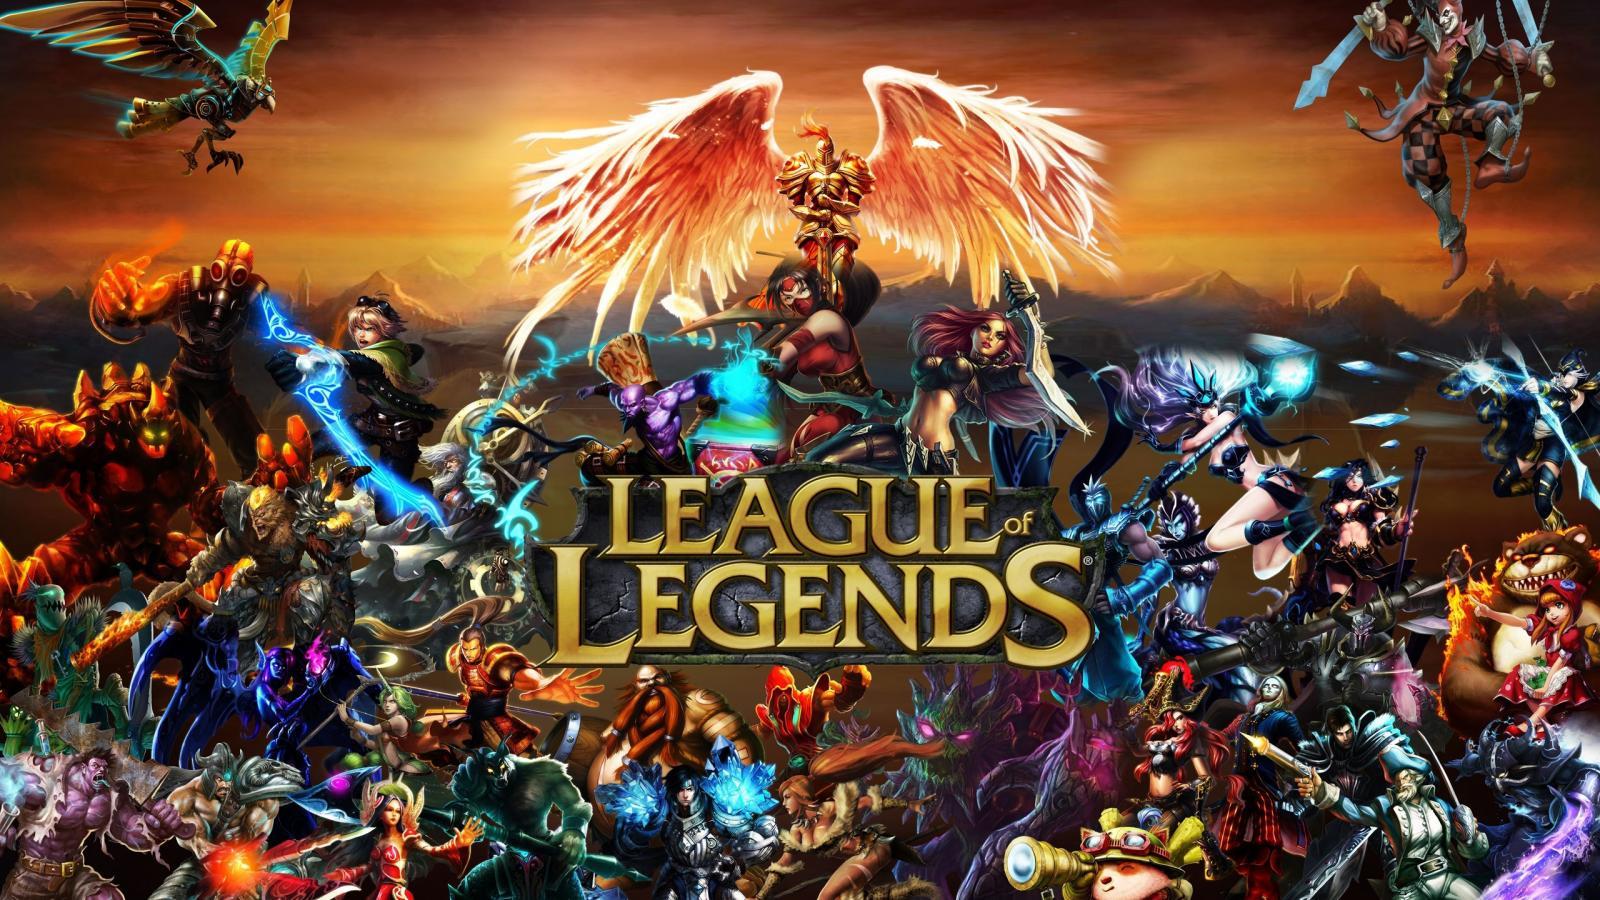 League of Legends, Niezbędnik kibica - Intel Extreme Masters 2015 